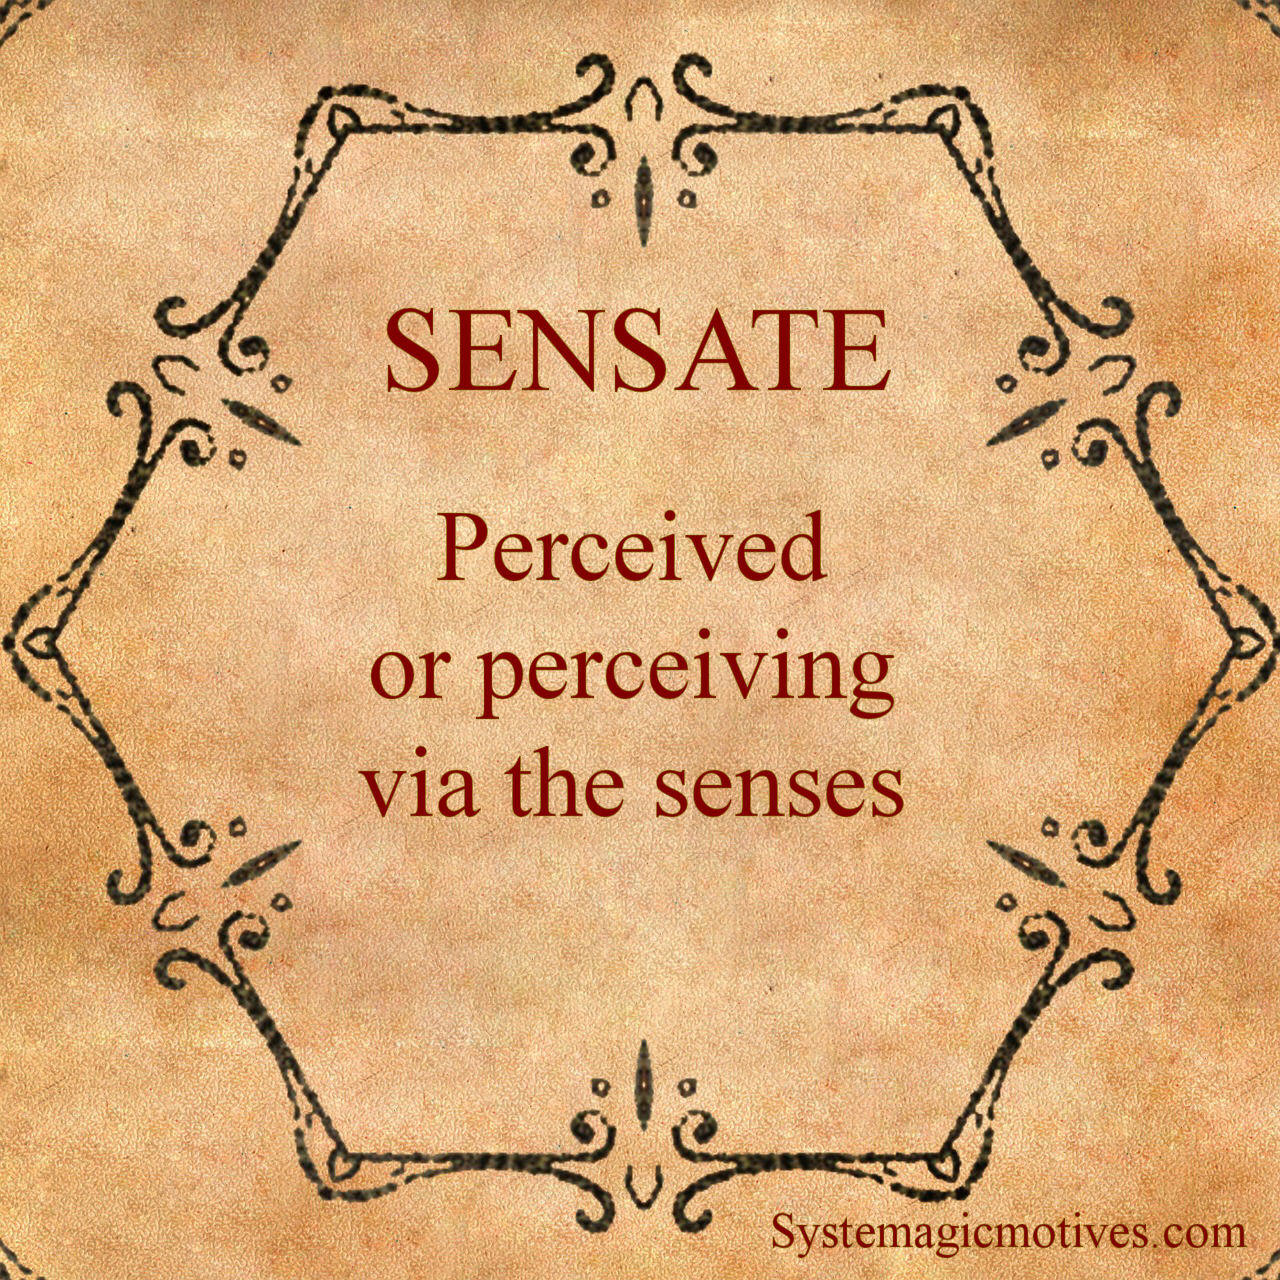 Graphic Definition of Sensate